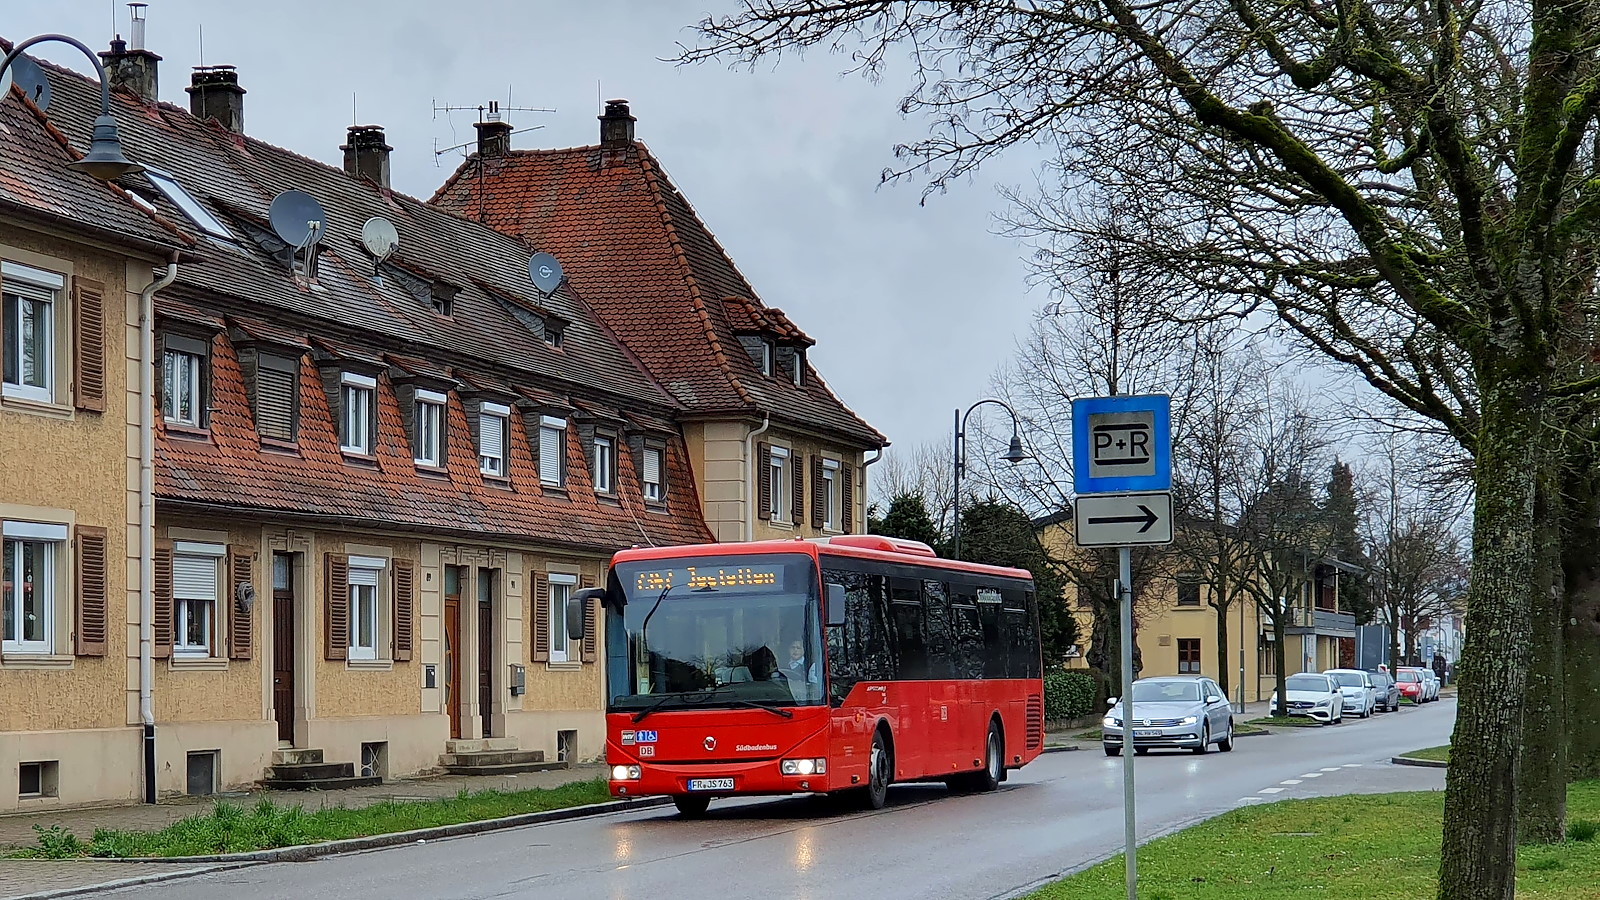 Freiburg im Breisgau, Irisbus Crossway LE 12M # FR-JS 763